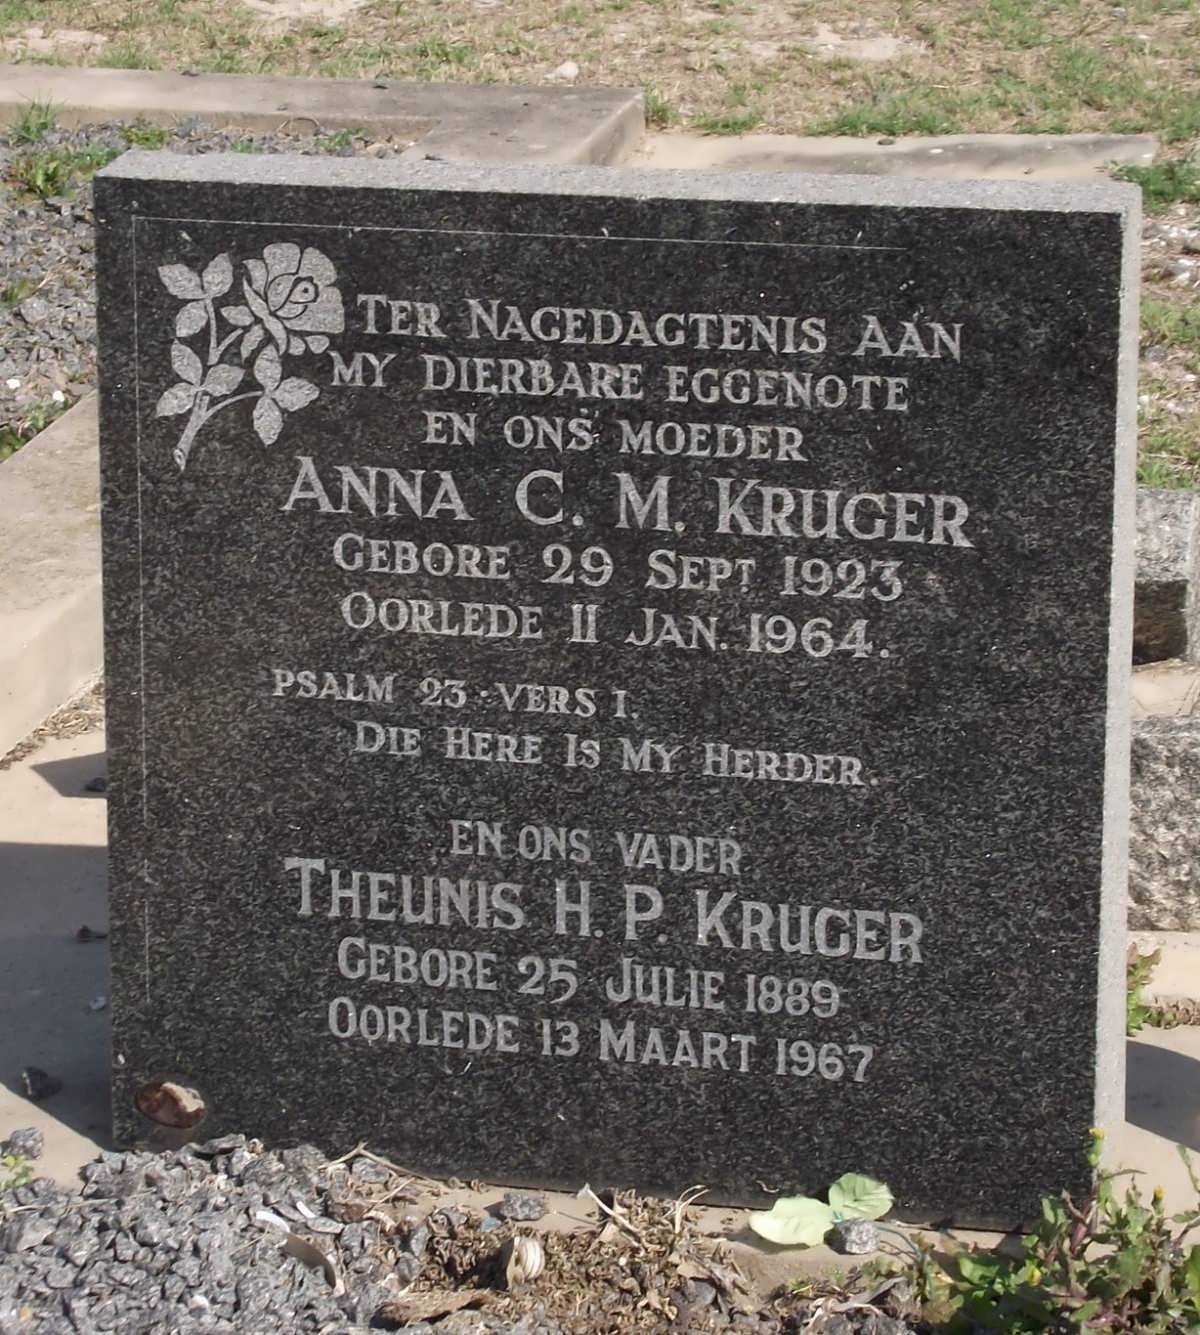 KRUGER Theunis H.P. 1889-1967 & Anna C.M. 1923-1964